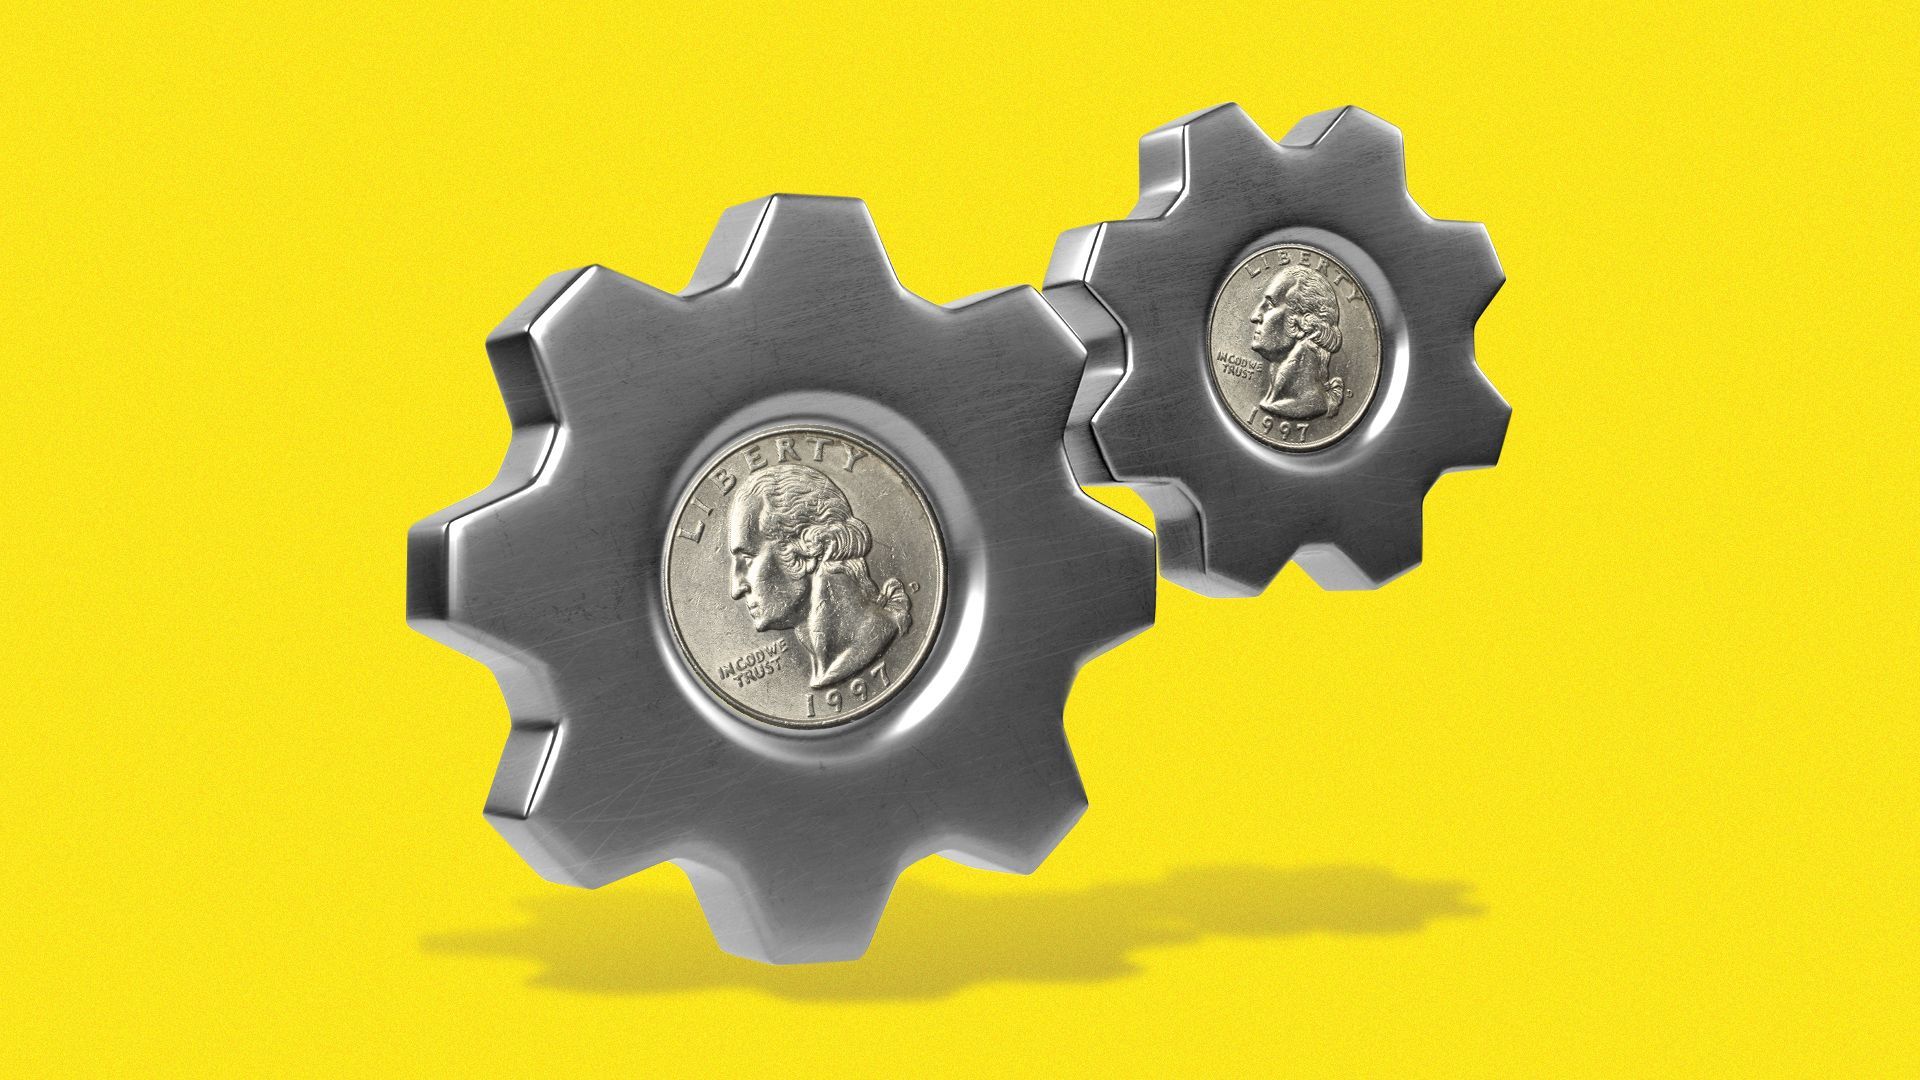 Illustration of cogwheels made of quarters rotating together.